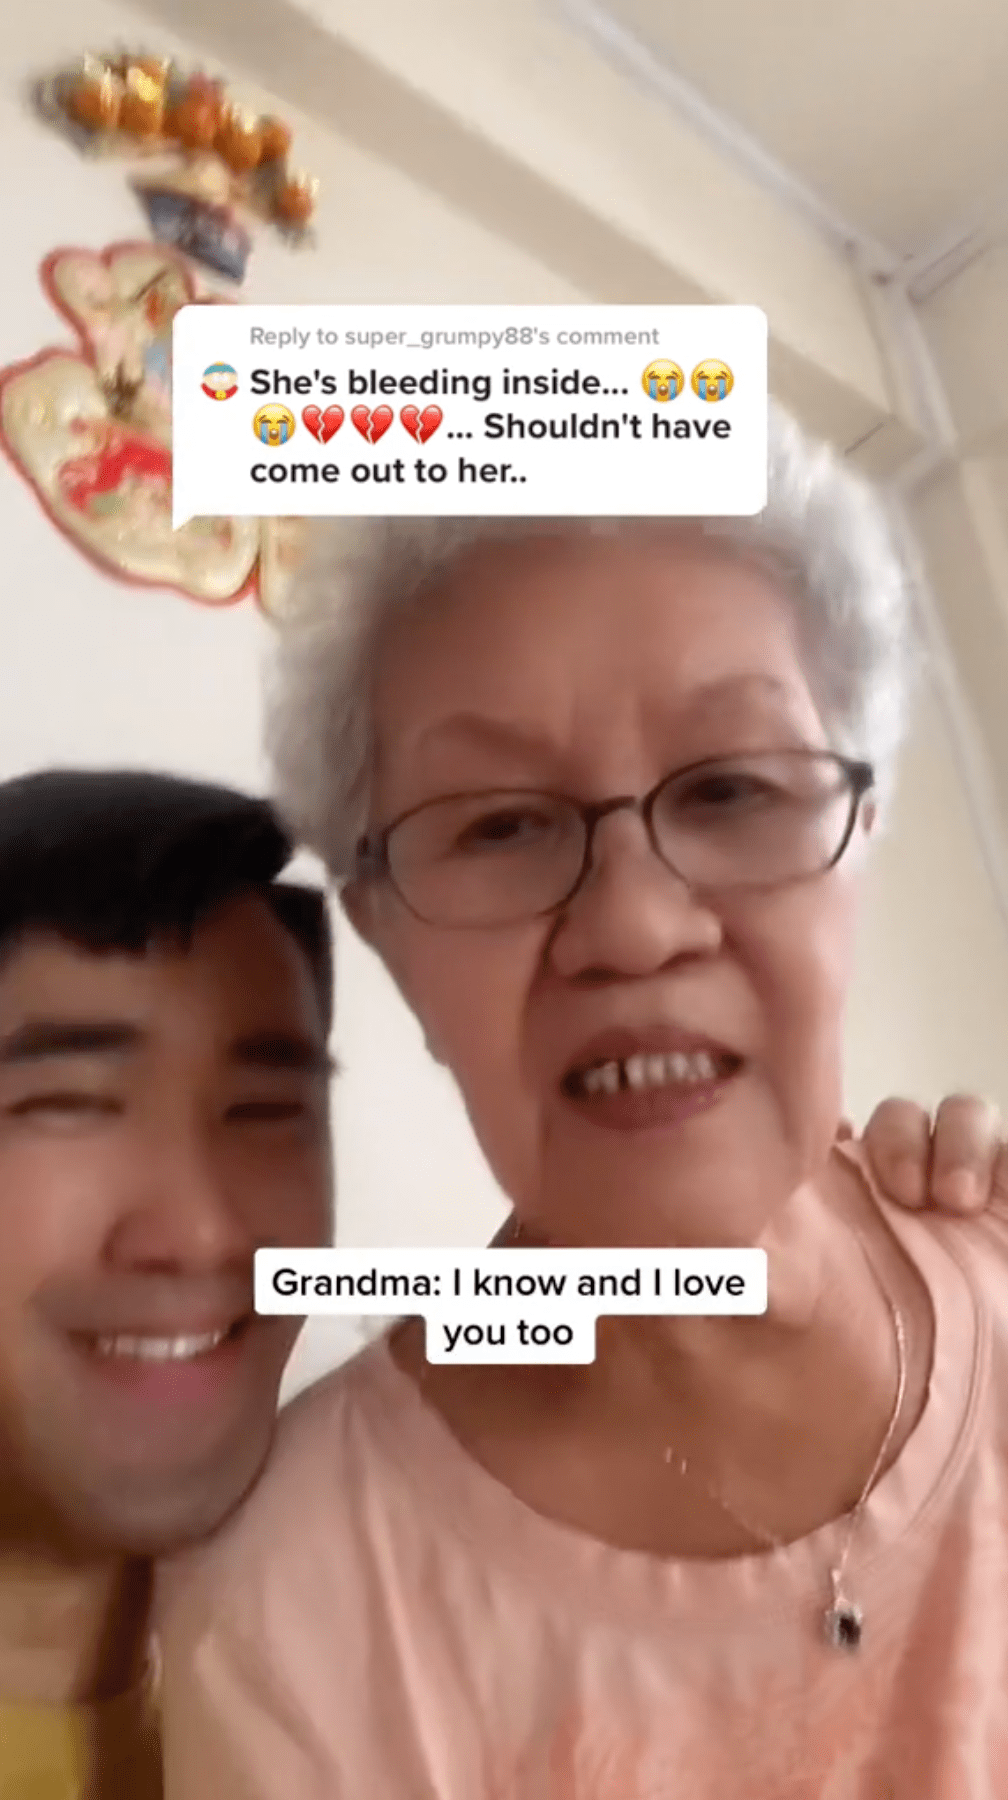 Man comes out grandma